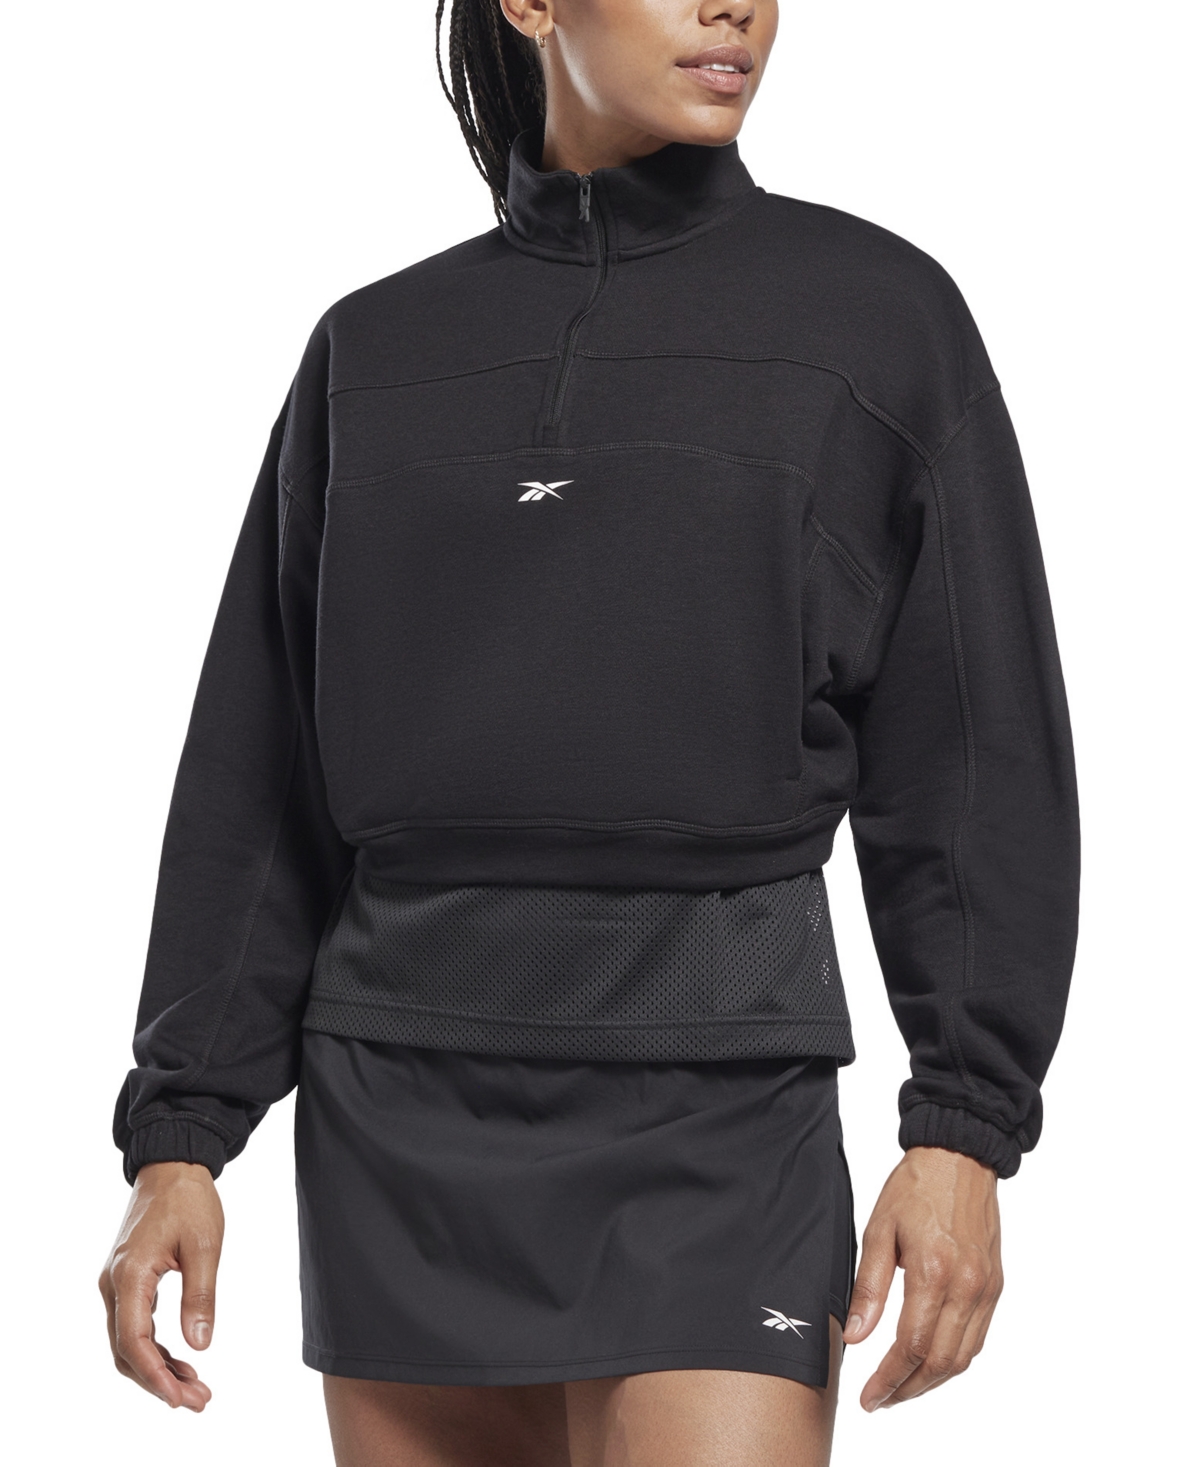 Reebok Women's Workout Ready Quarter-Zip Sweatshirt (Black, Sizes S-XL) $17.93 + Free Store Pickup at Macy's or FS on $25+